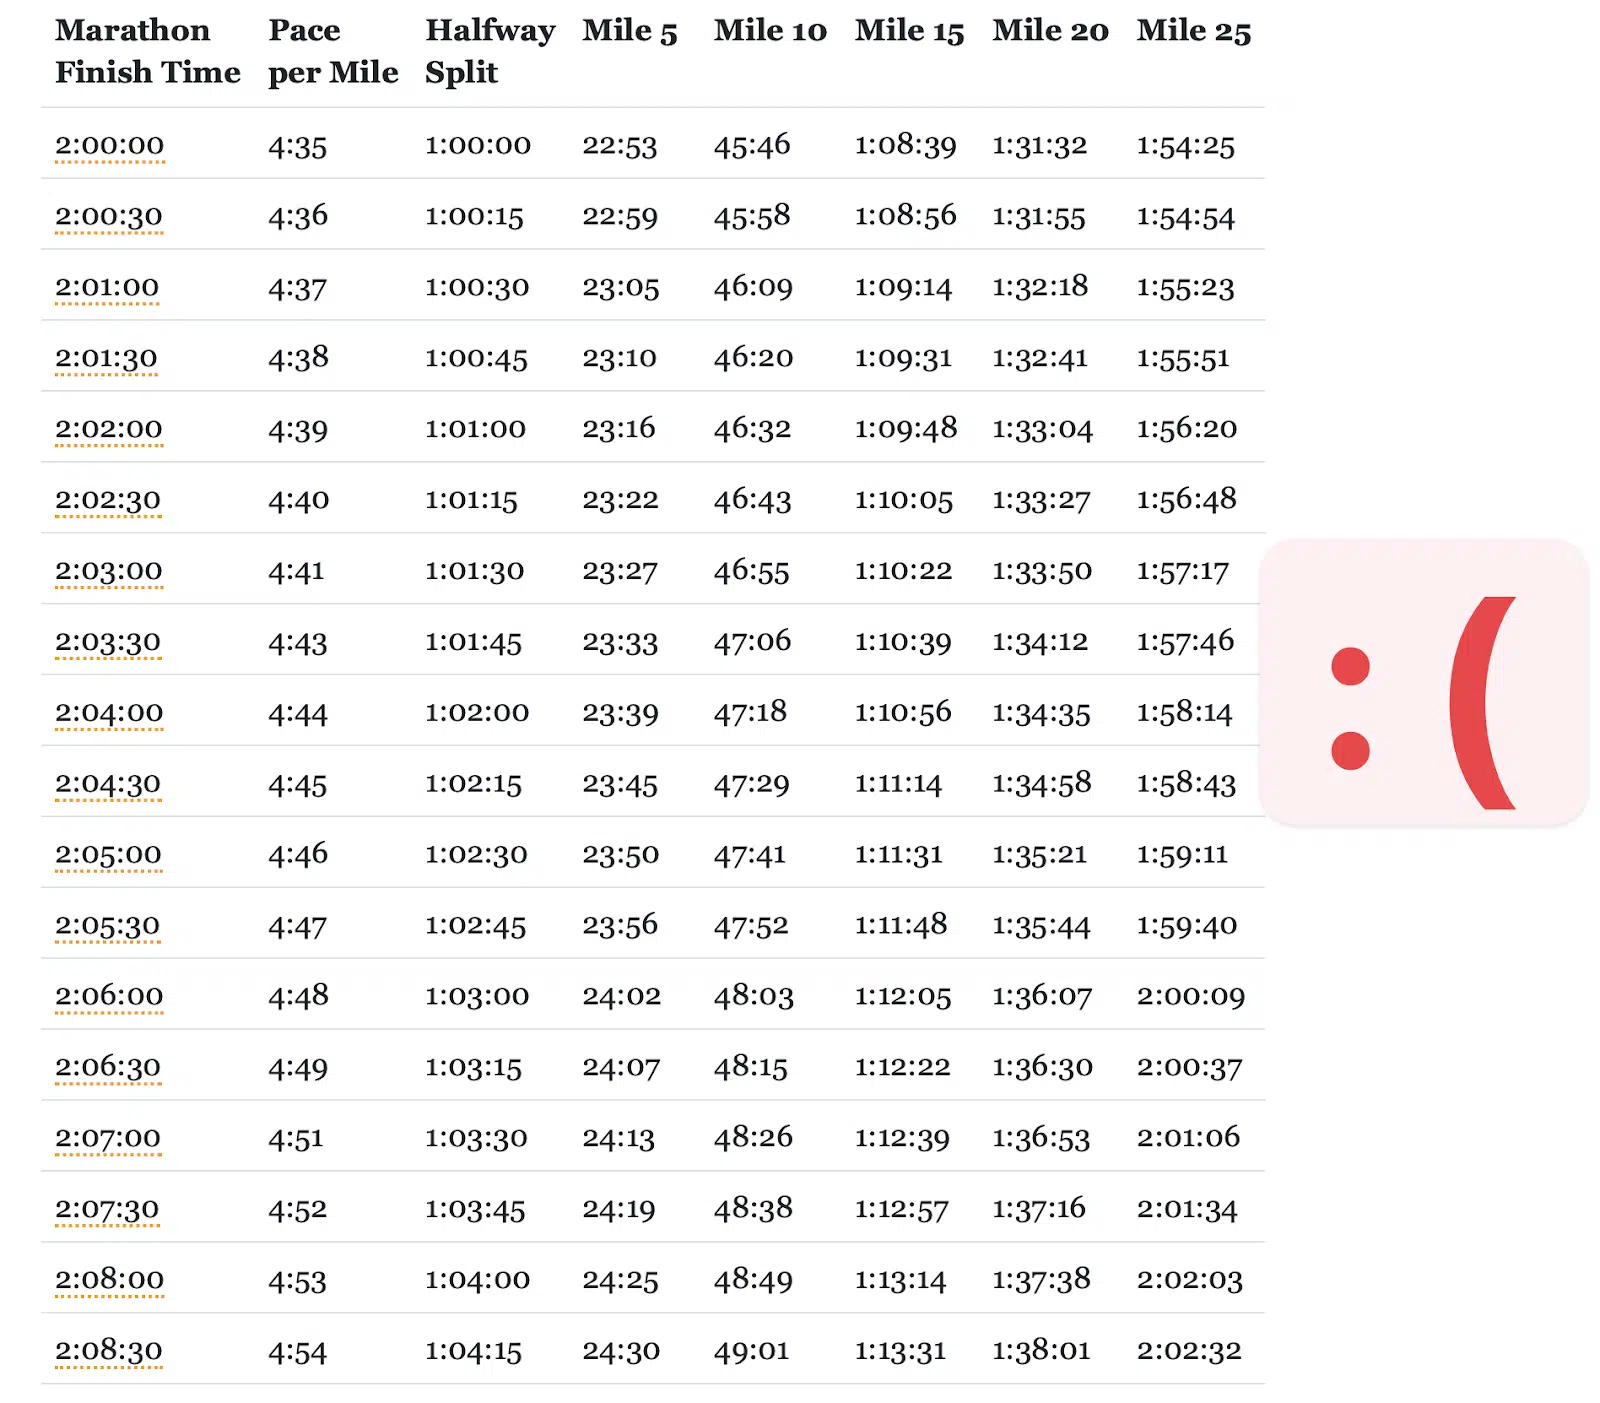 Marathon finish time - table